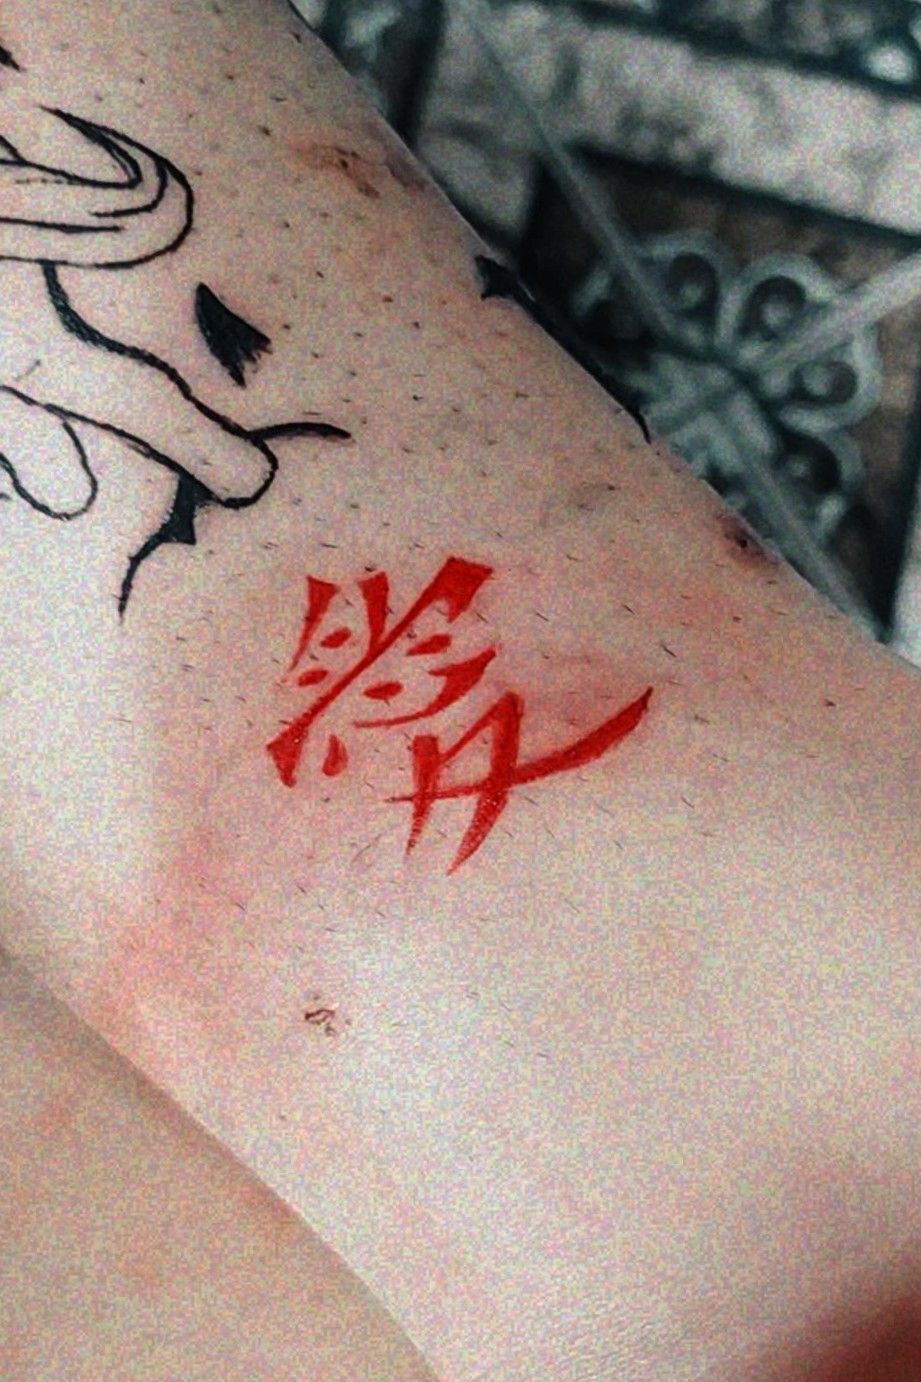 tattoo (kanji igual o do Gaara) Significa amor